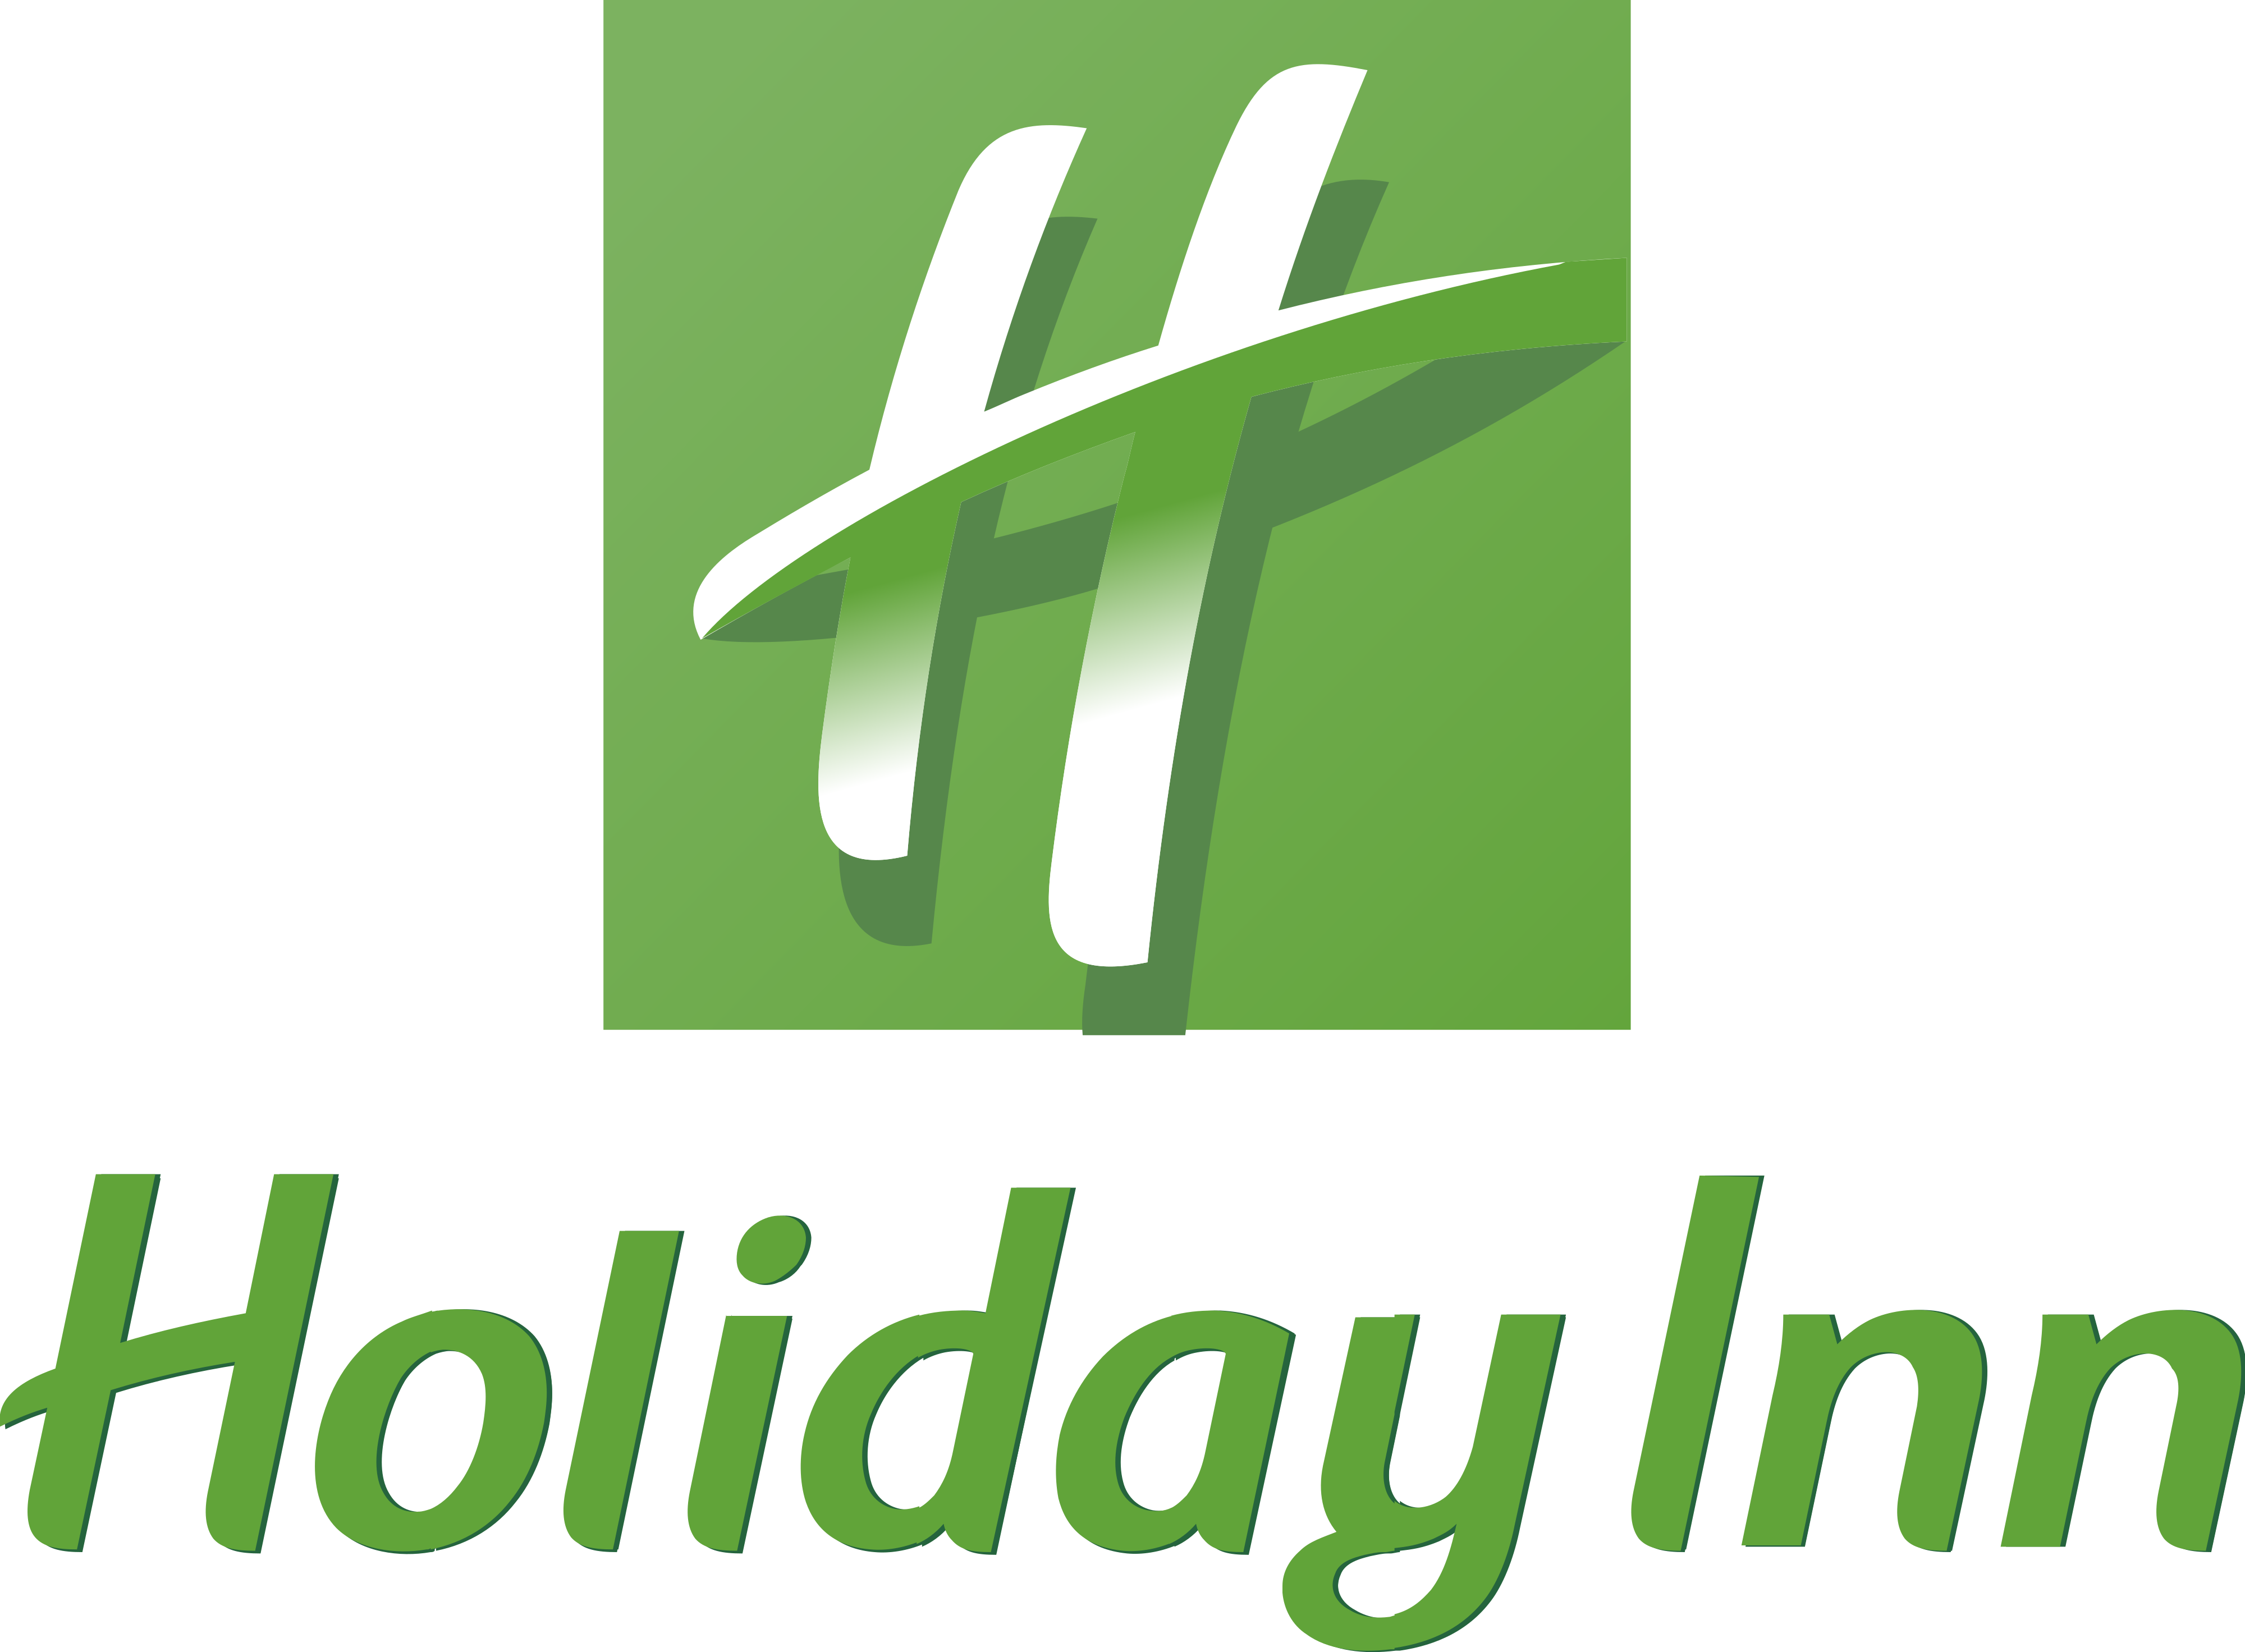 Holiday Inn Сокольники лого. Holiday Inn Калининград logo. Отели Холидей ИНН С логотипом. Холидей ИНН Сокольники знак.